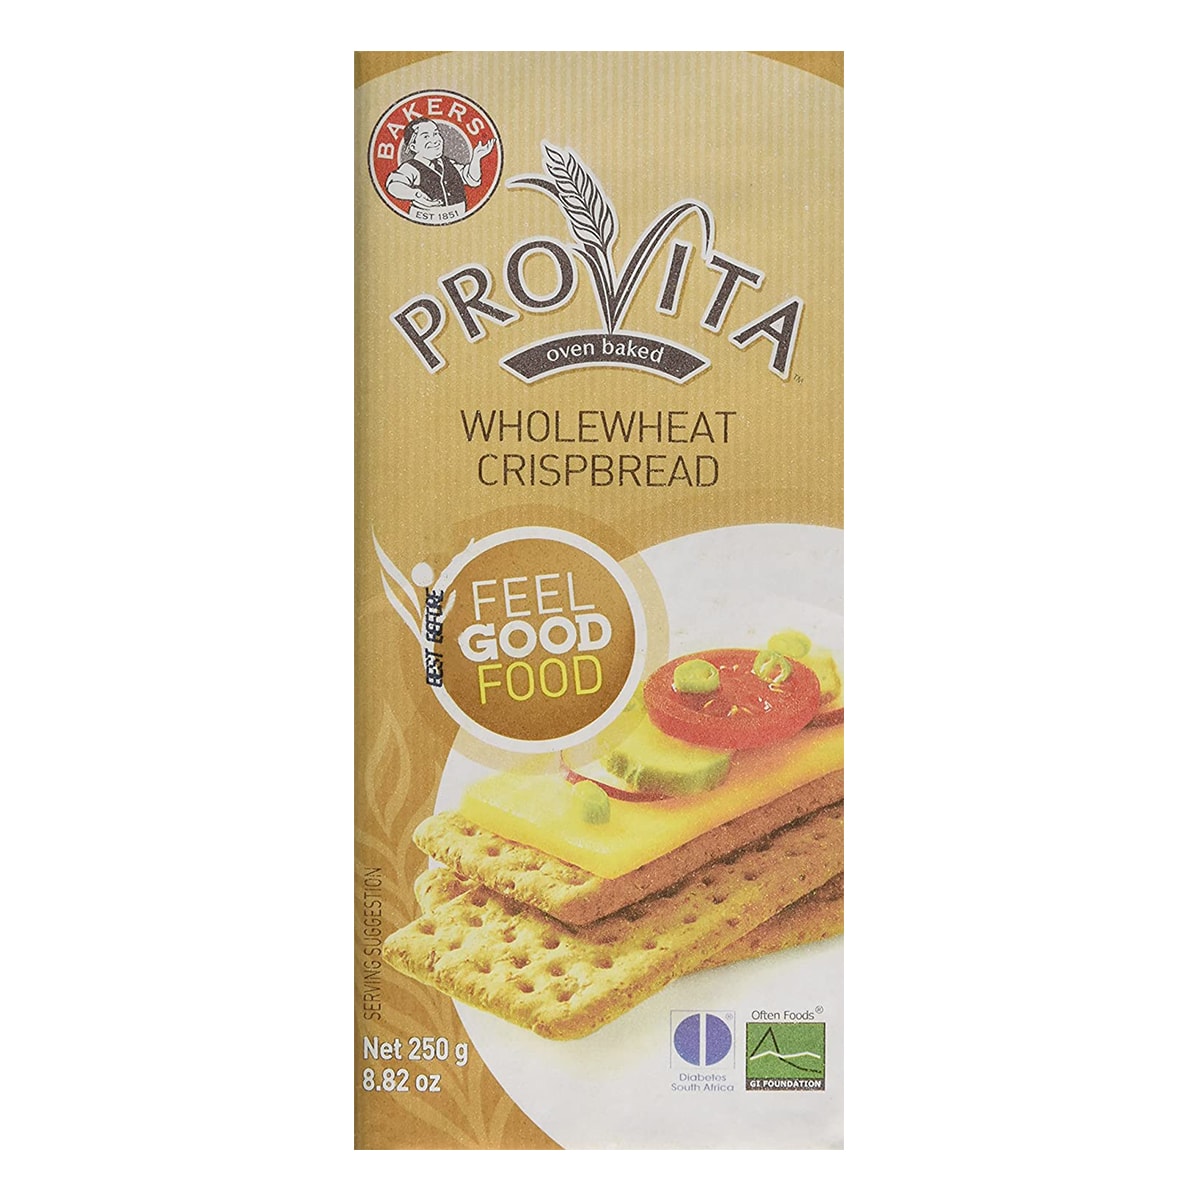 Buy Bakers Provita Wholewheat Crispbread - 250 gm